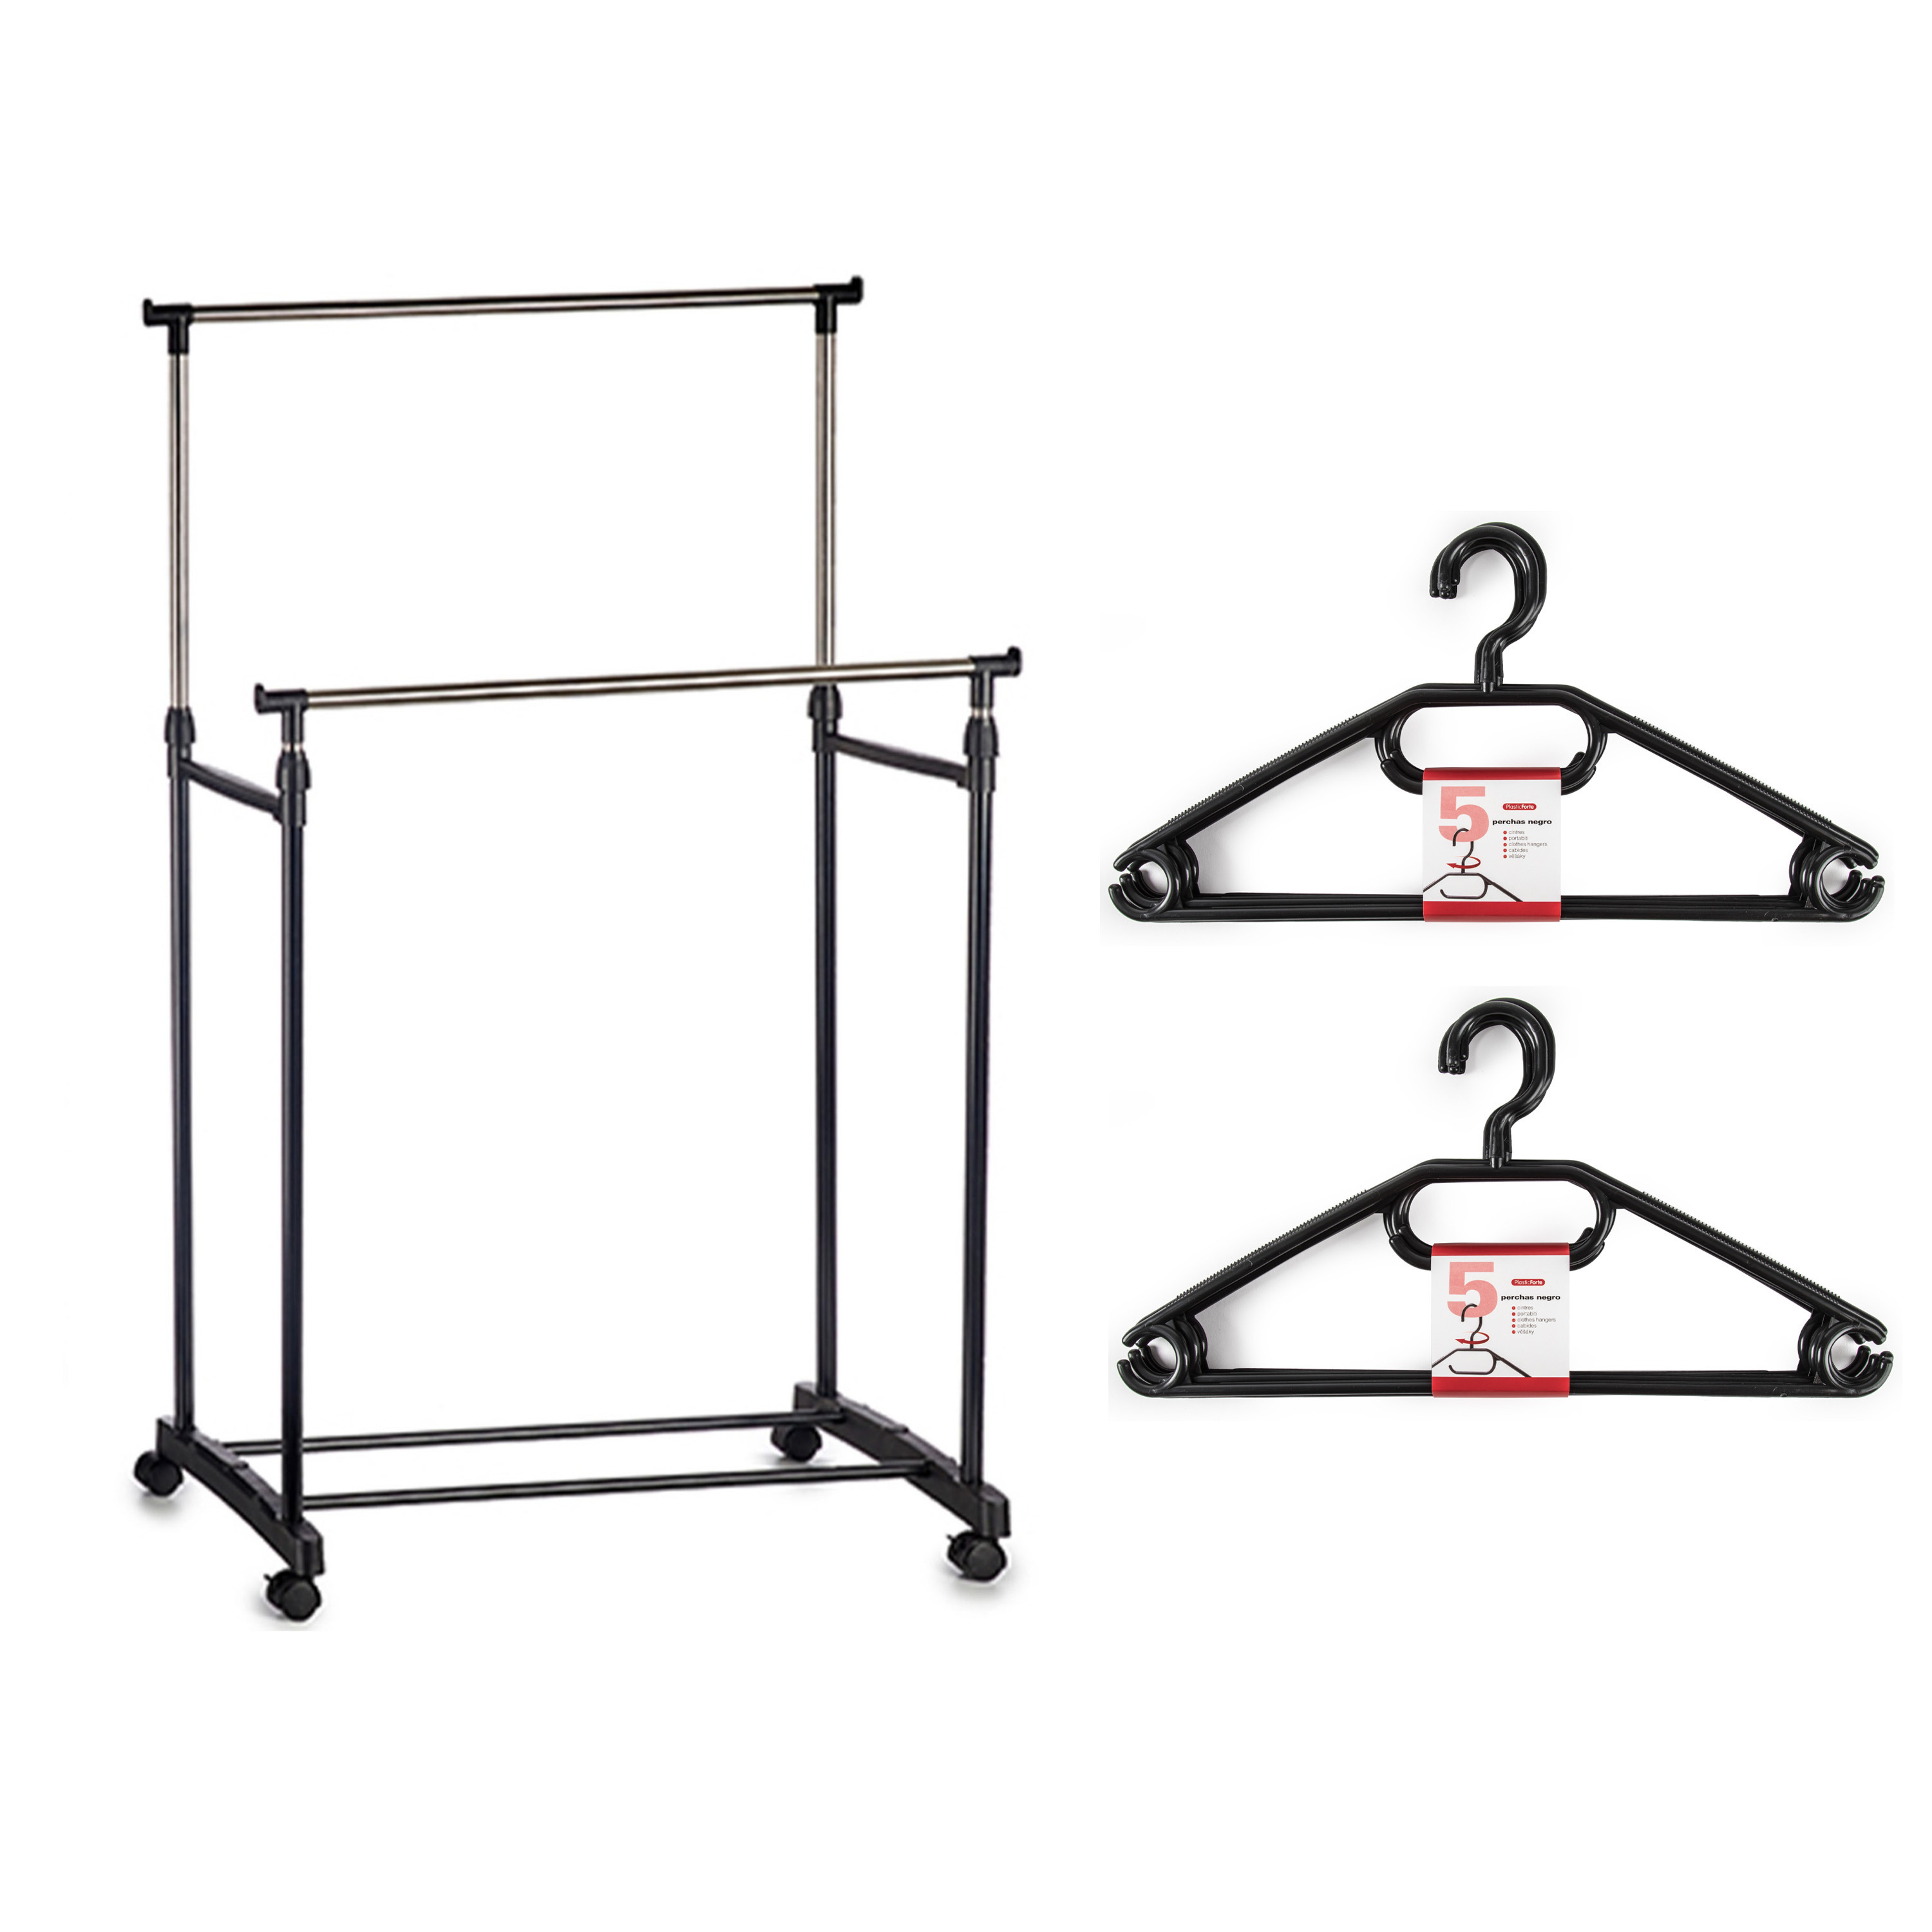 Kledingrek met kleding hangers dubbele stang kunststof zwart 80 x 42 x 160